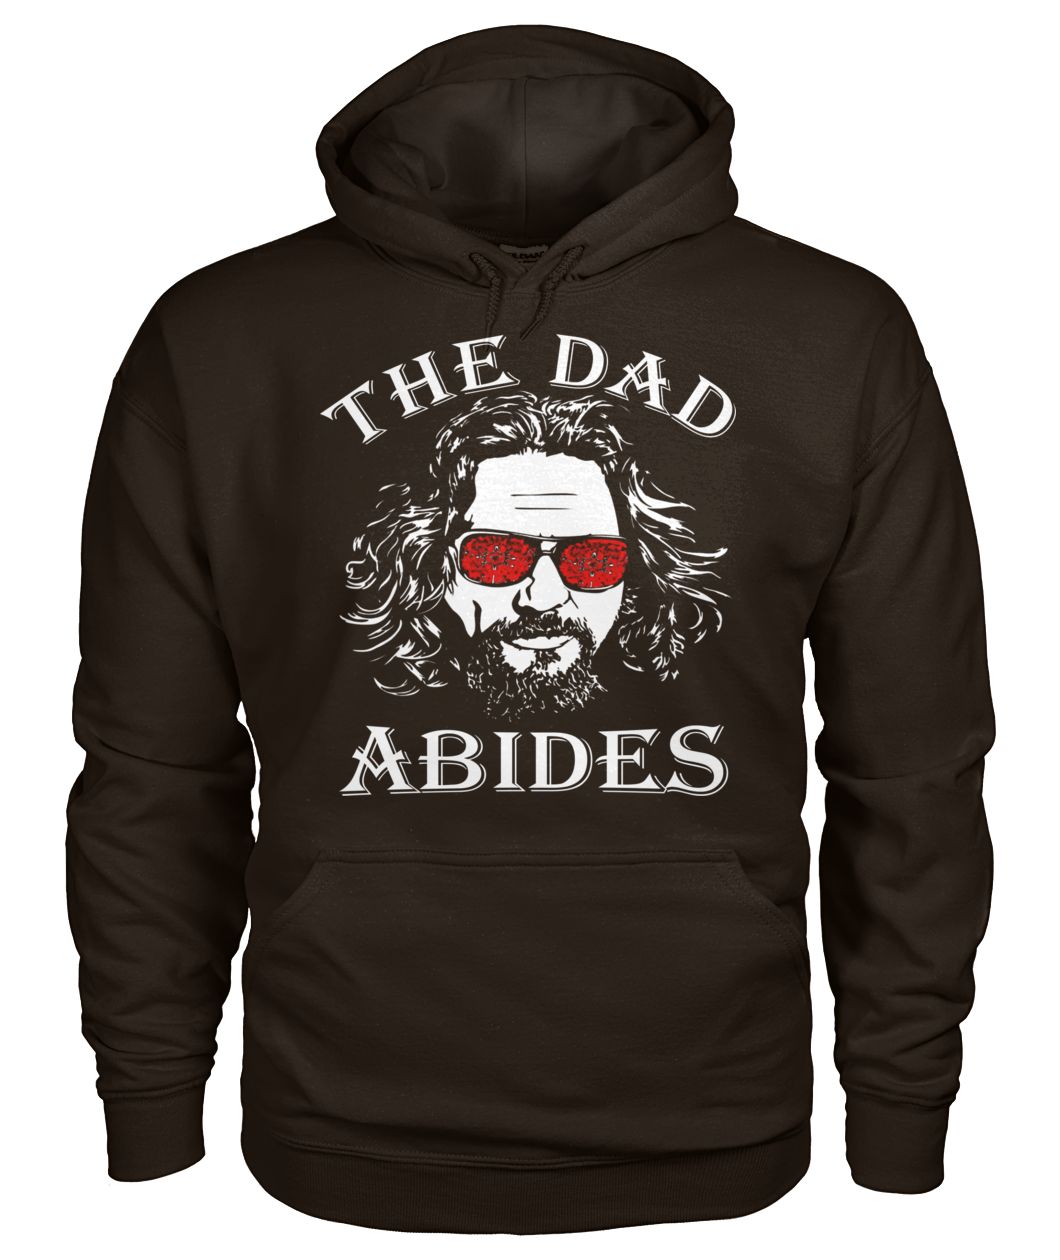 The dad abides gildan hoodie